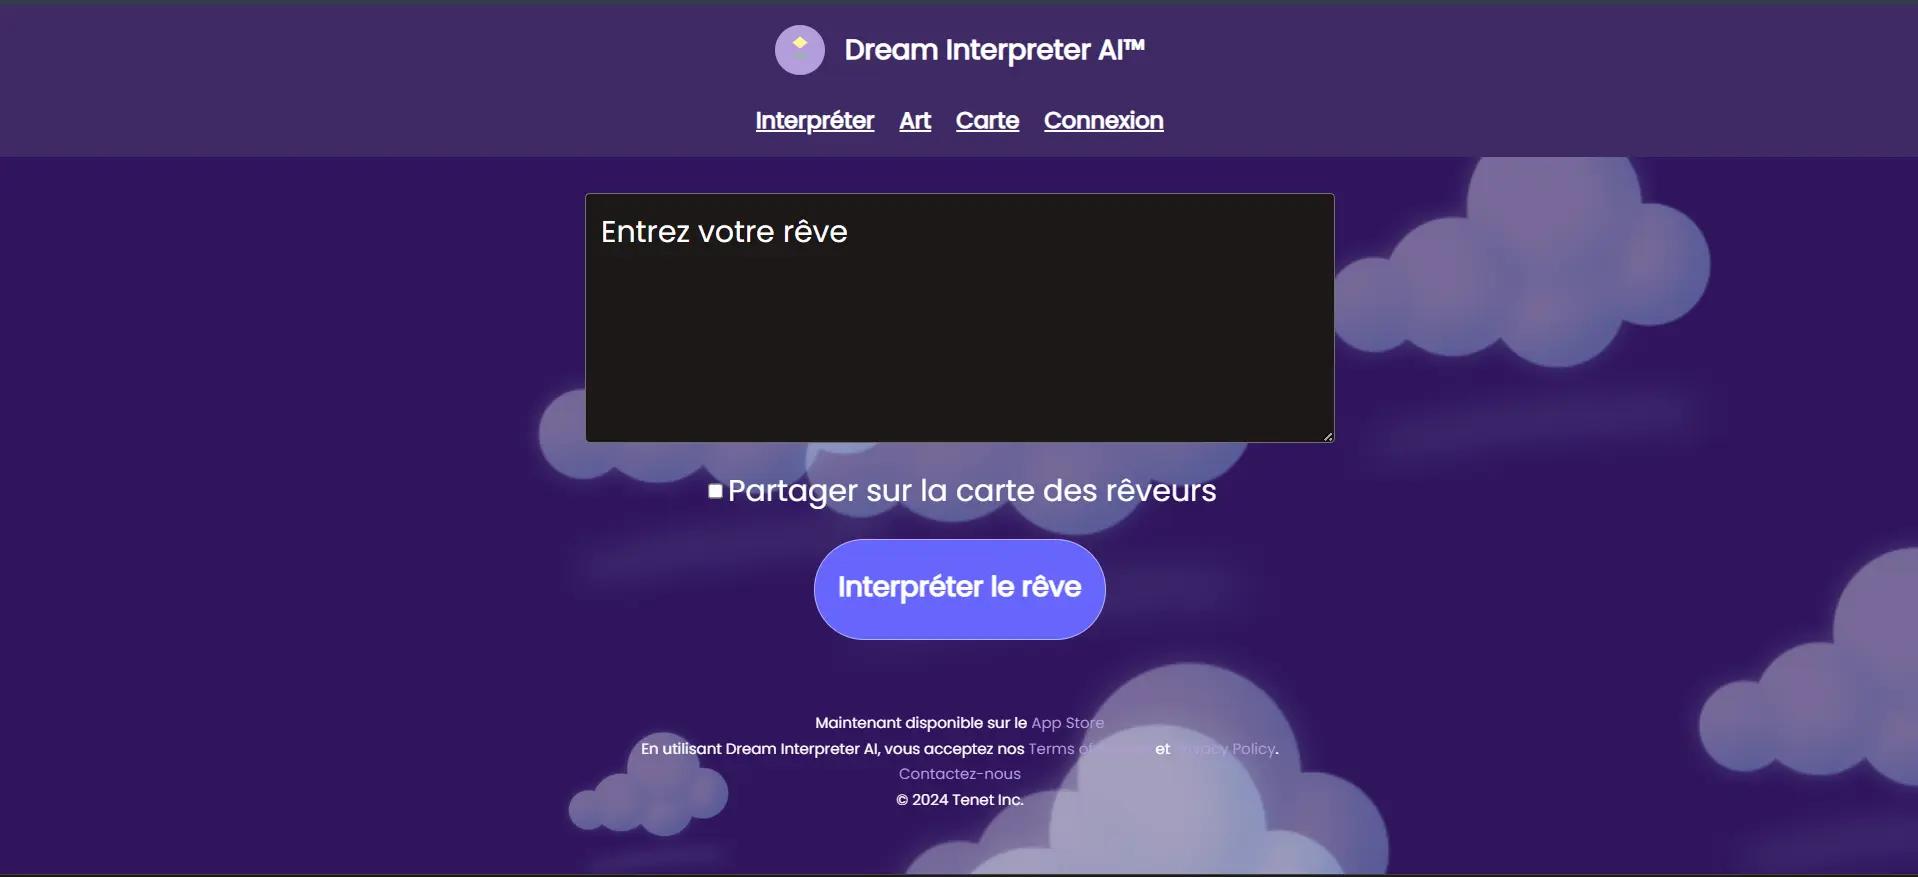 Dream Interpreter Website